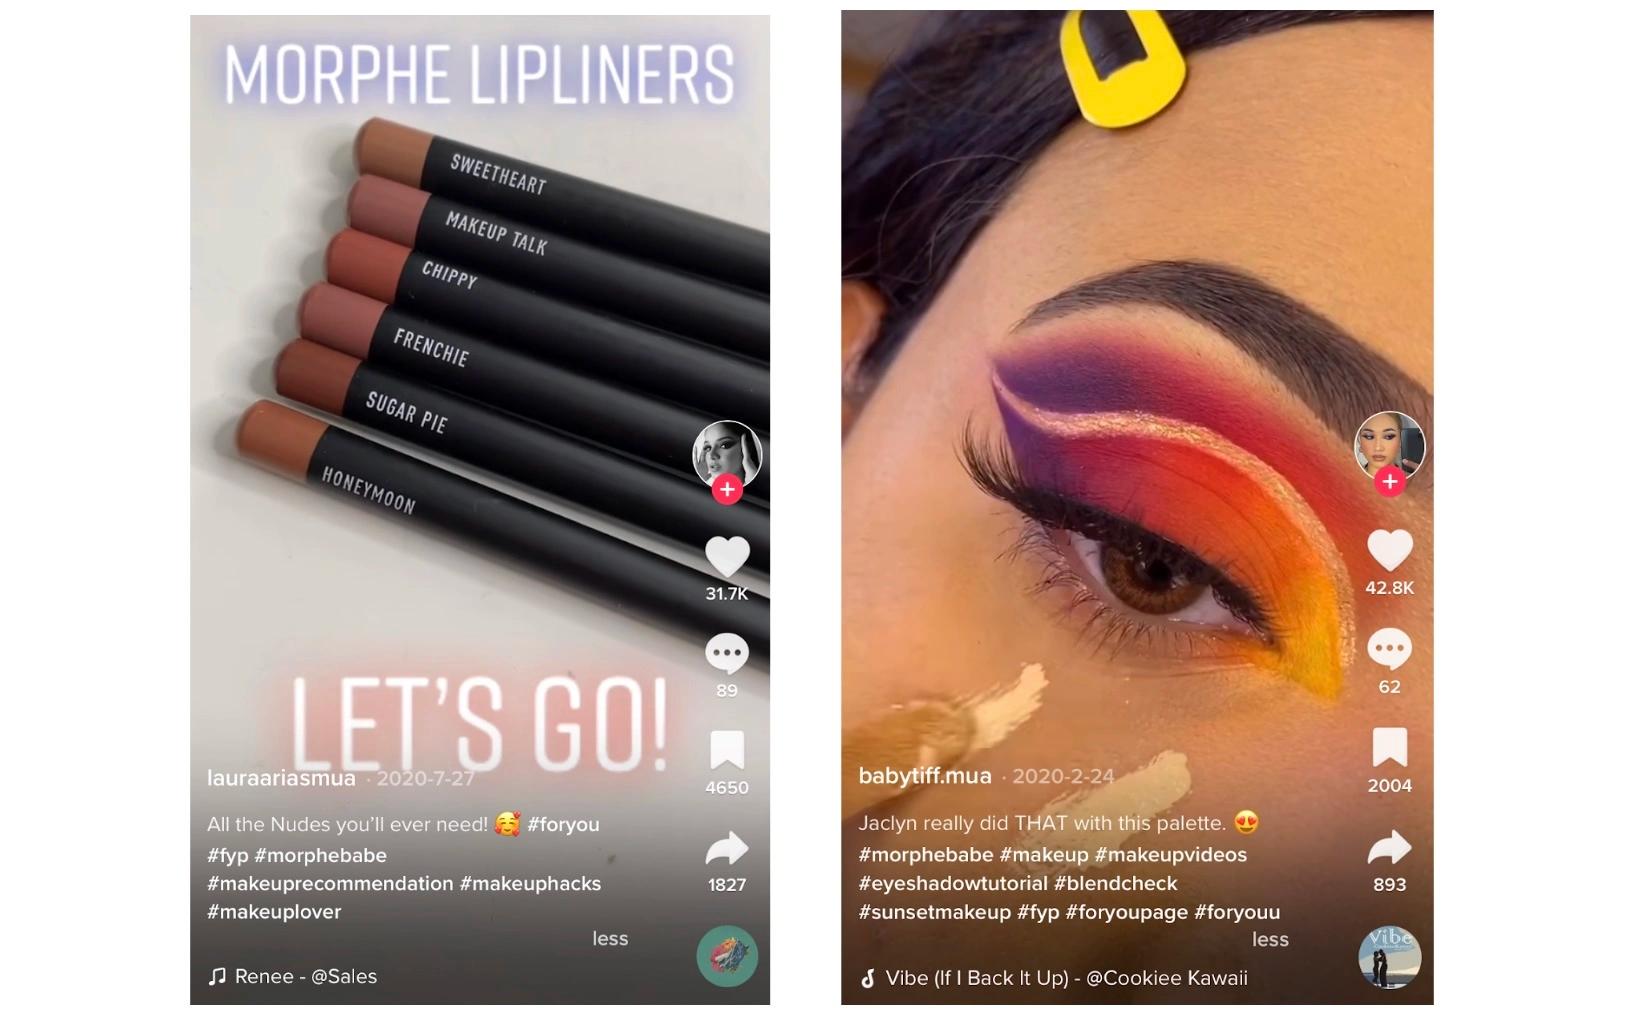 Screenshots of influencer TikTok videos showing Morphe makeup products